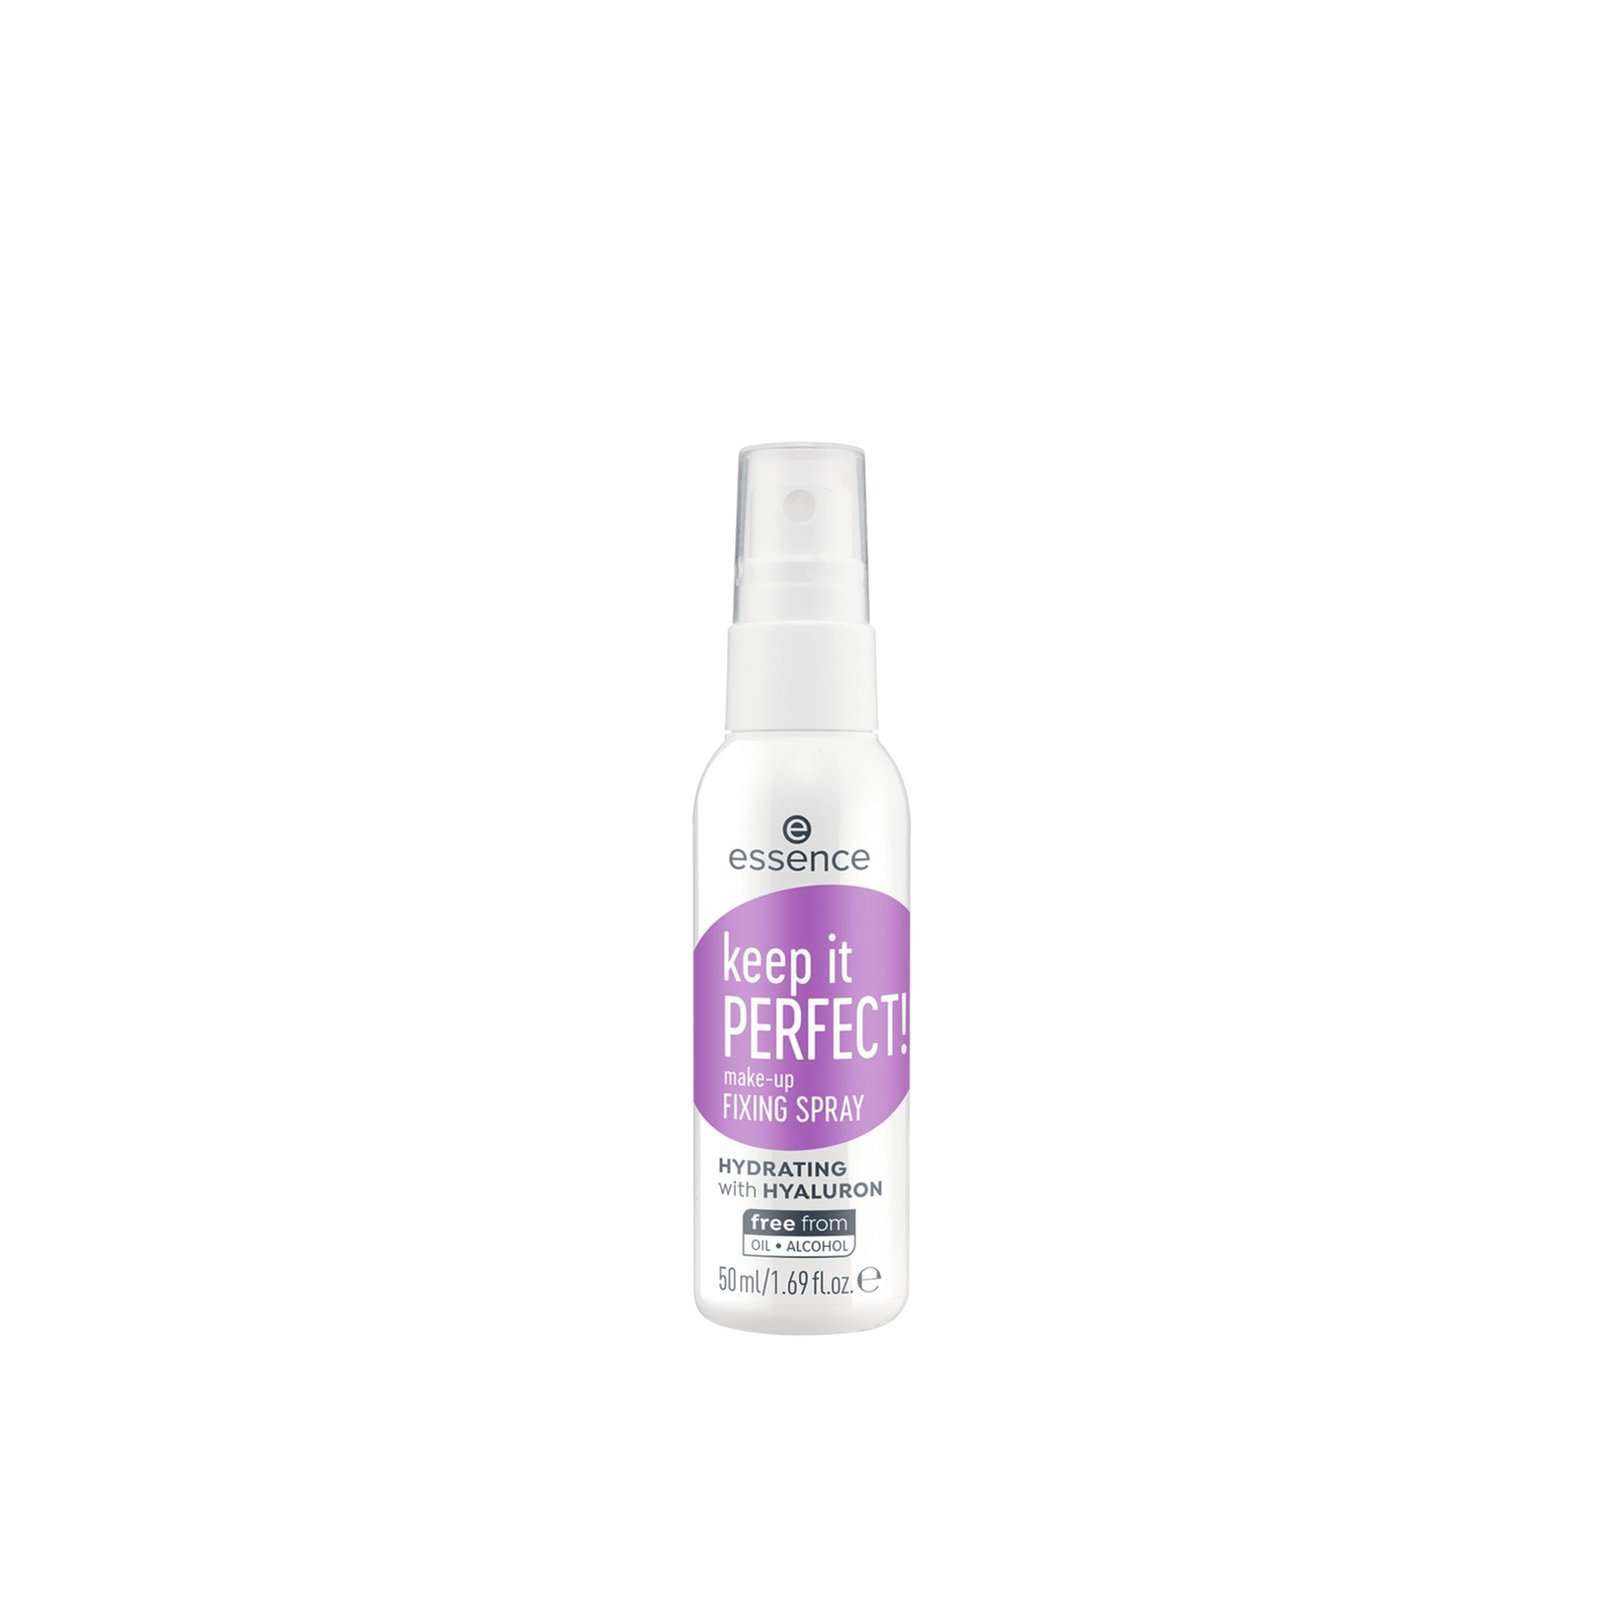 essence Keep It Perfect! Make-Up Fixing Spray 50ml (1.69floz)